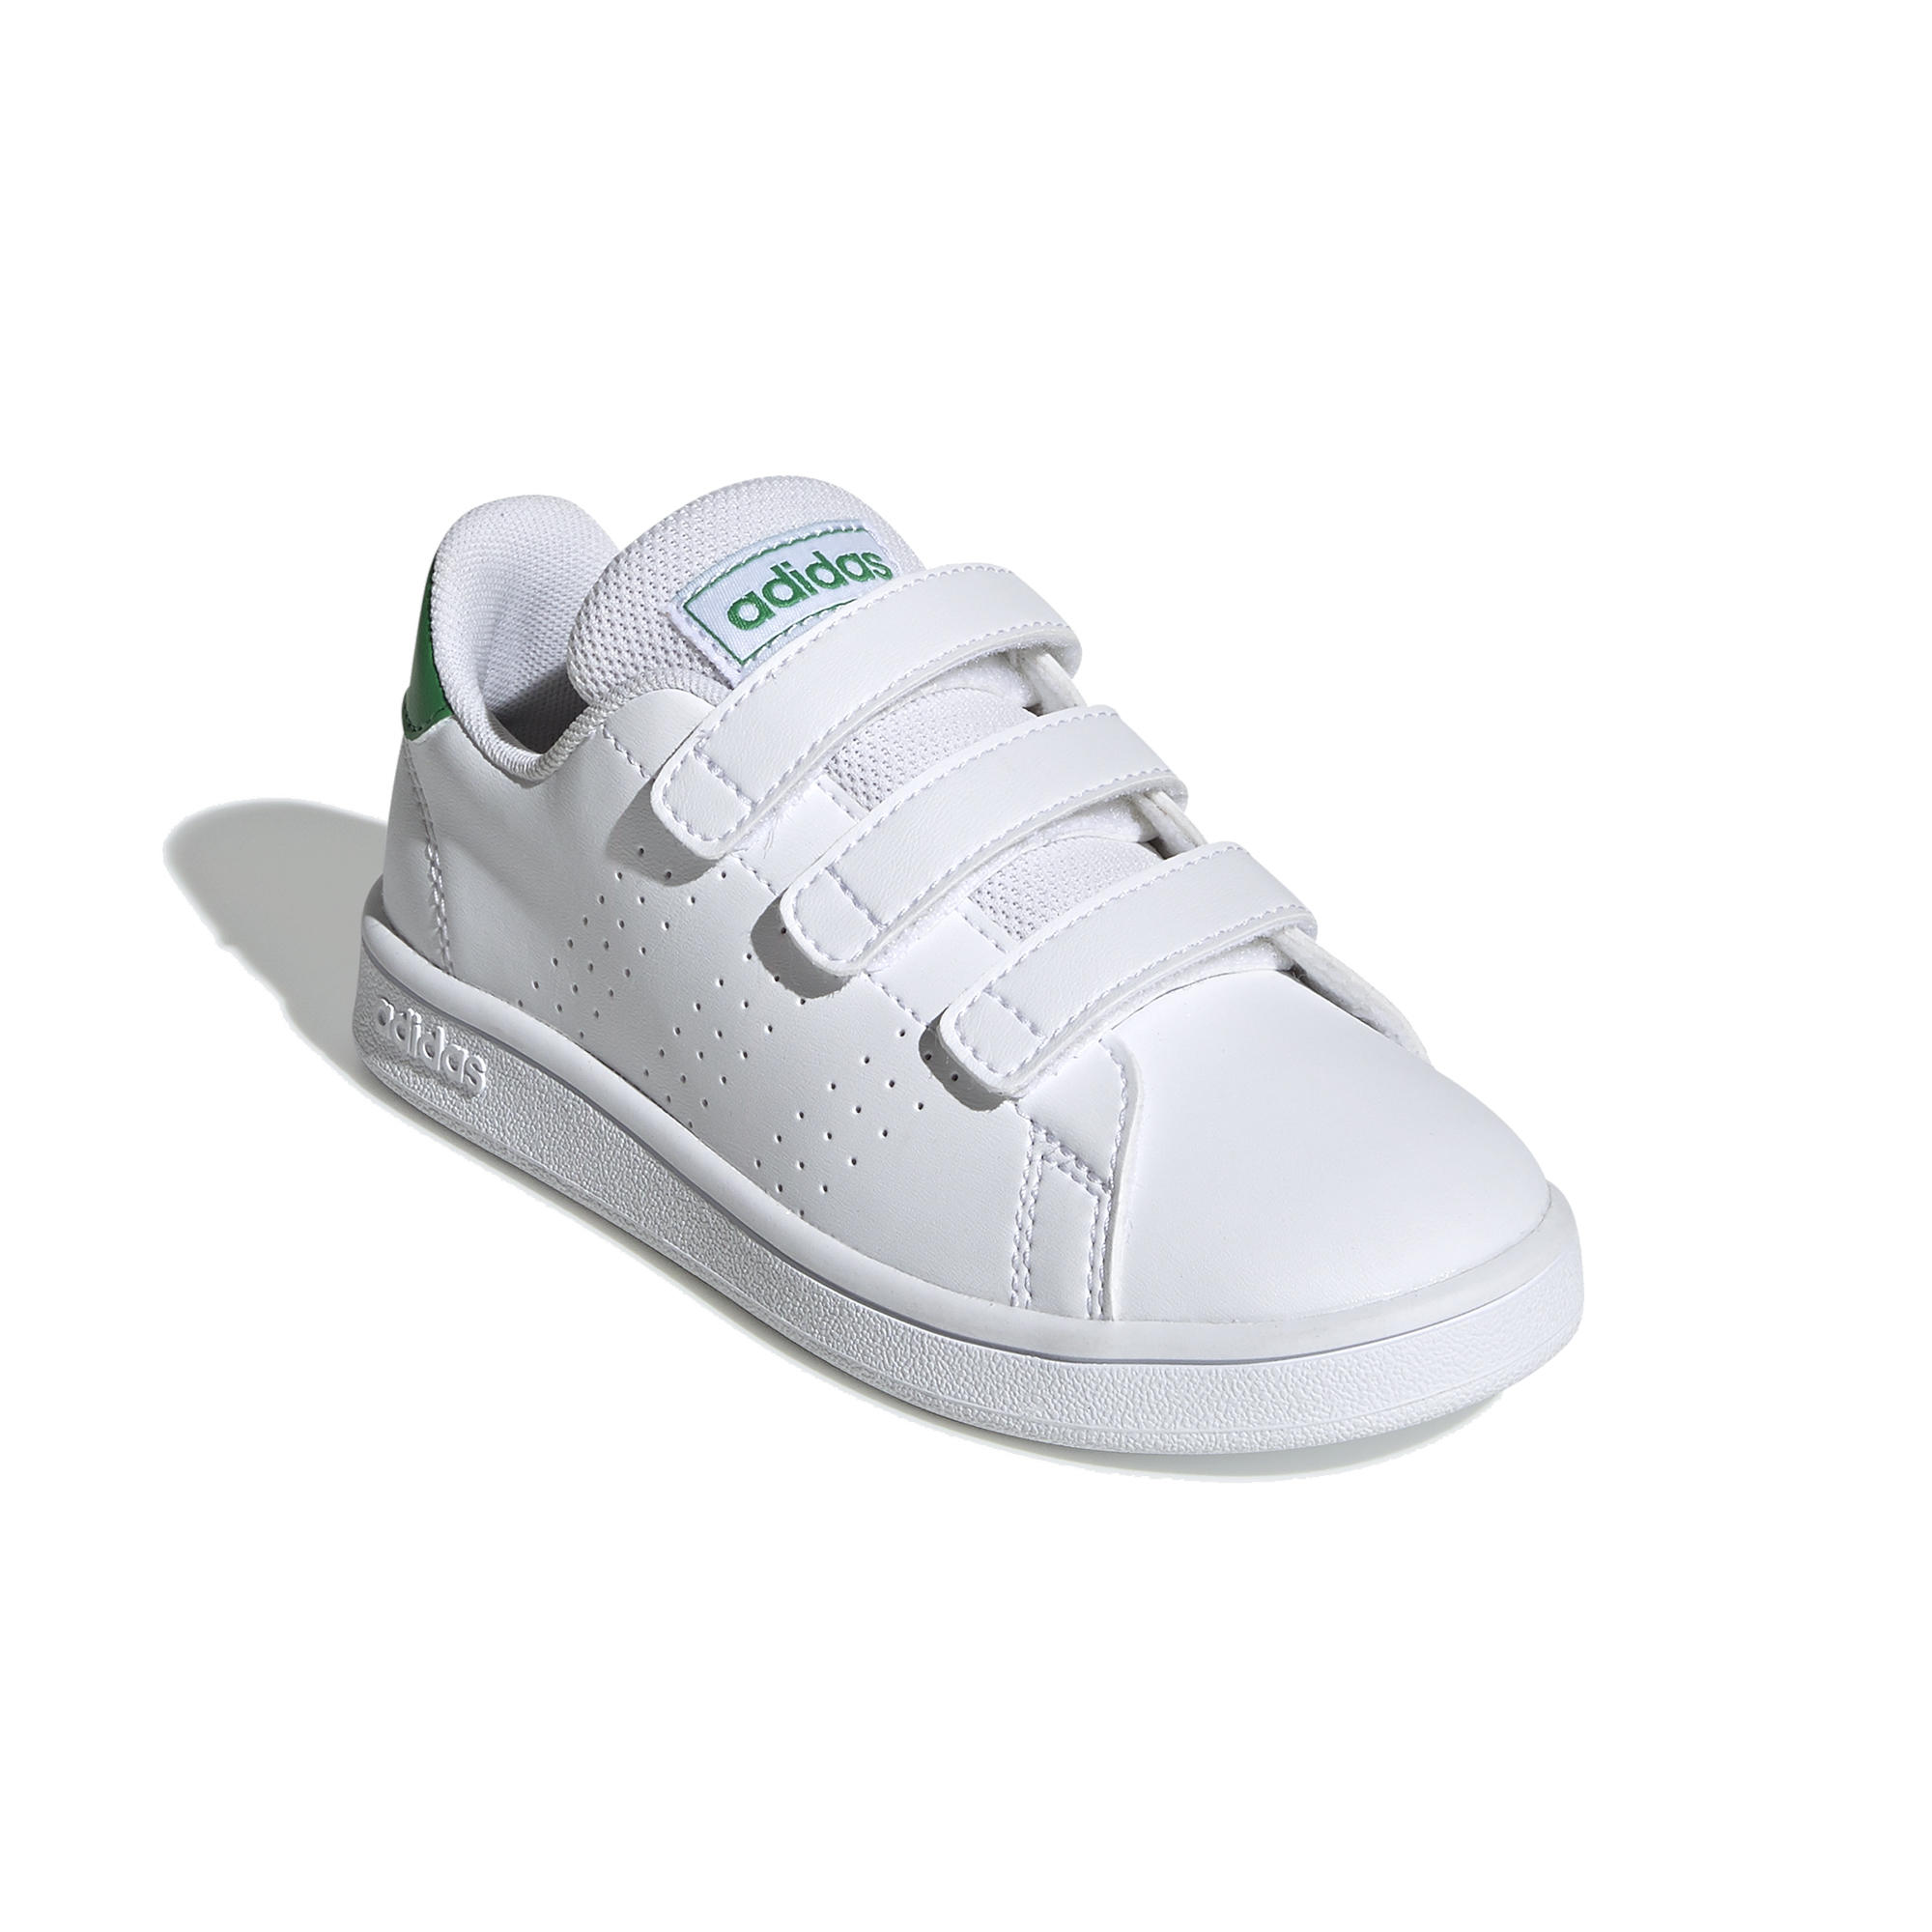 Scarpe tennis bambino adidas ADVANTAGE CLEAN bianco-verde الحازمي للاتصالات